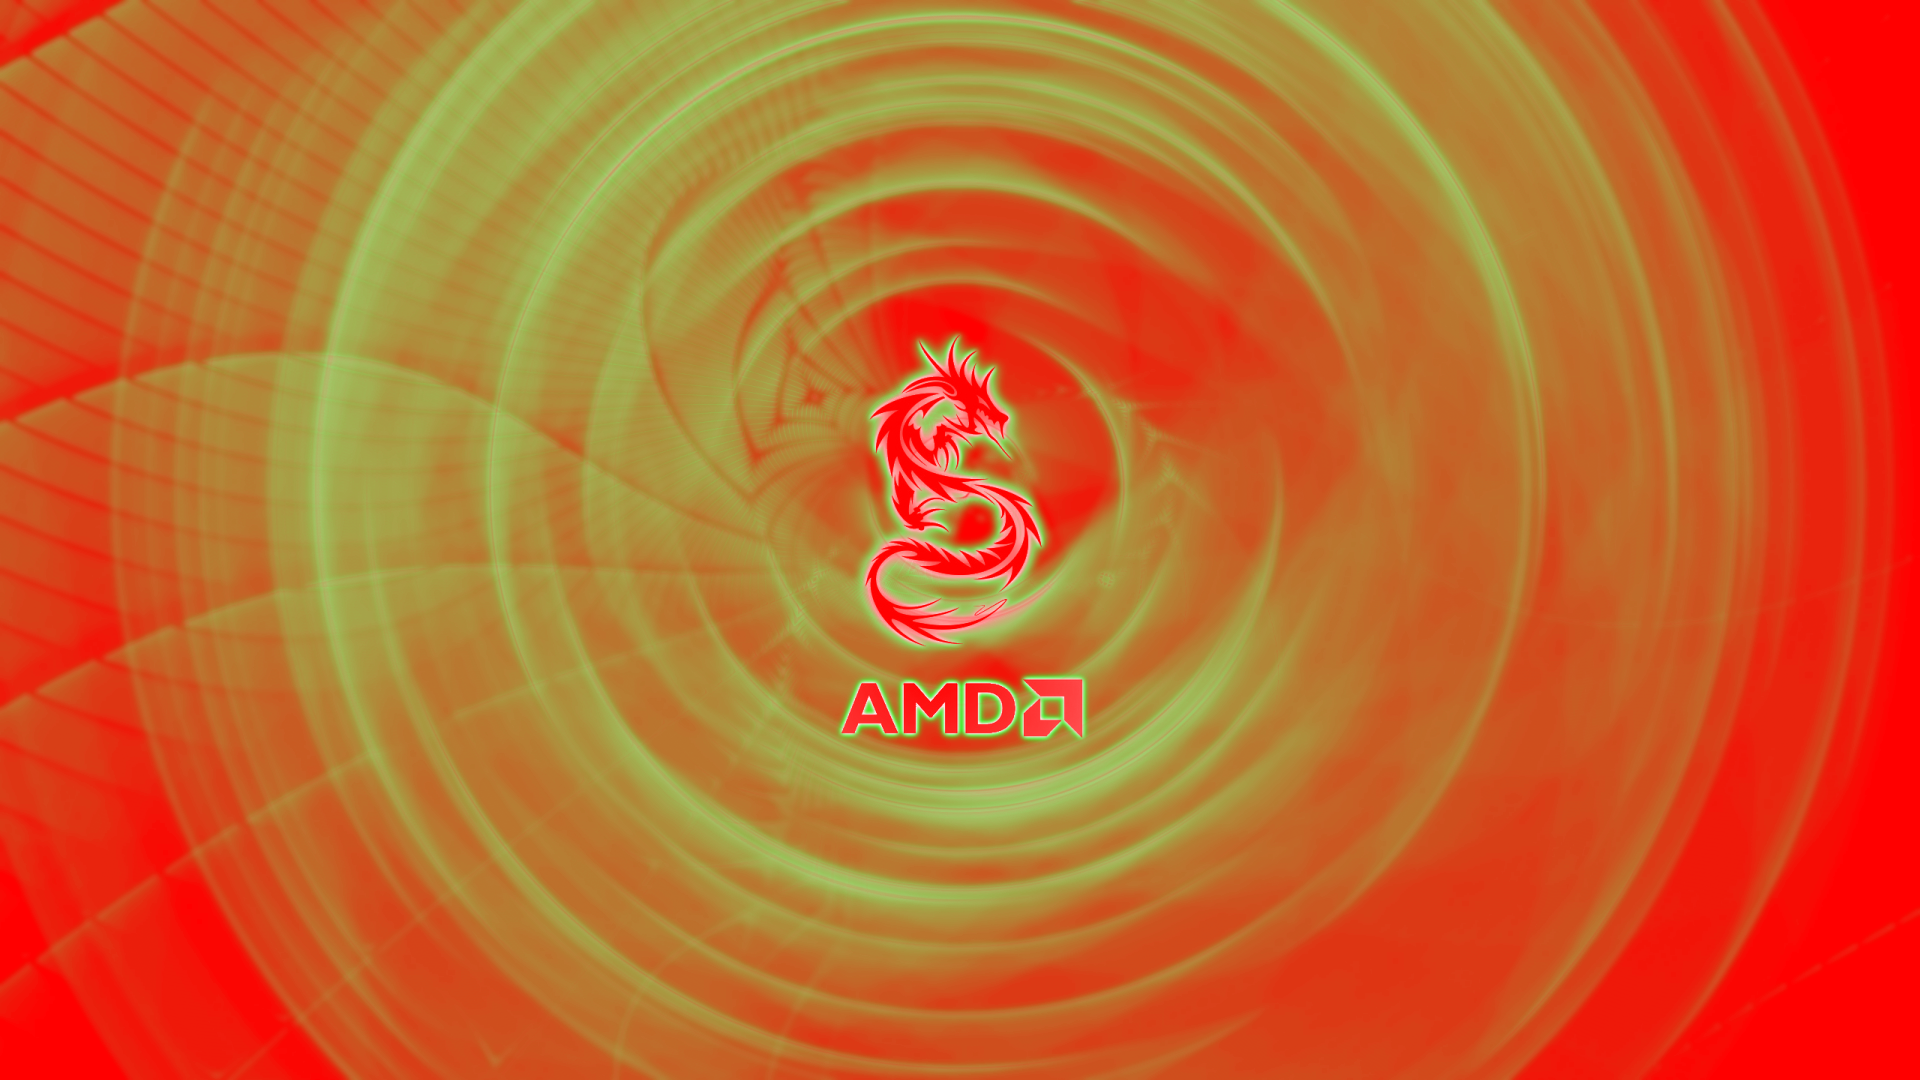 AMD Wallpaper Dragon by SPRacersDragon on DeviantArt